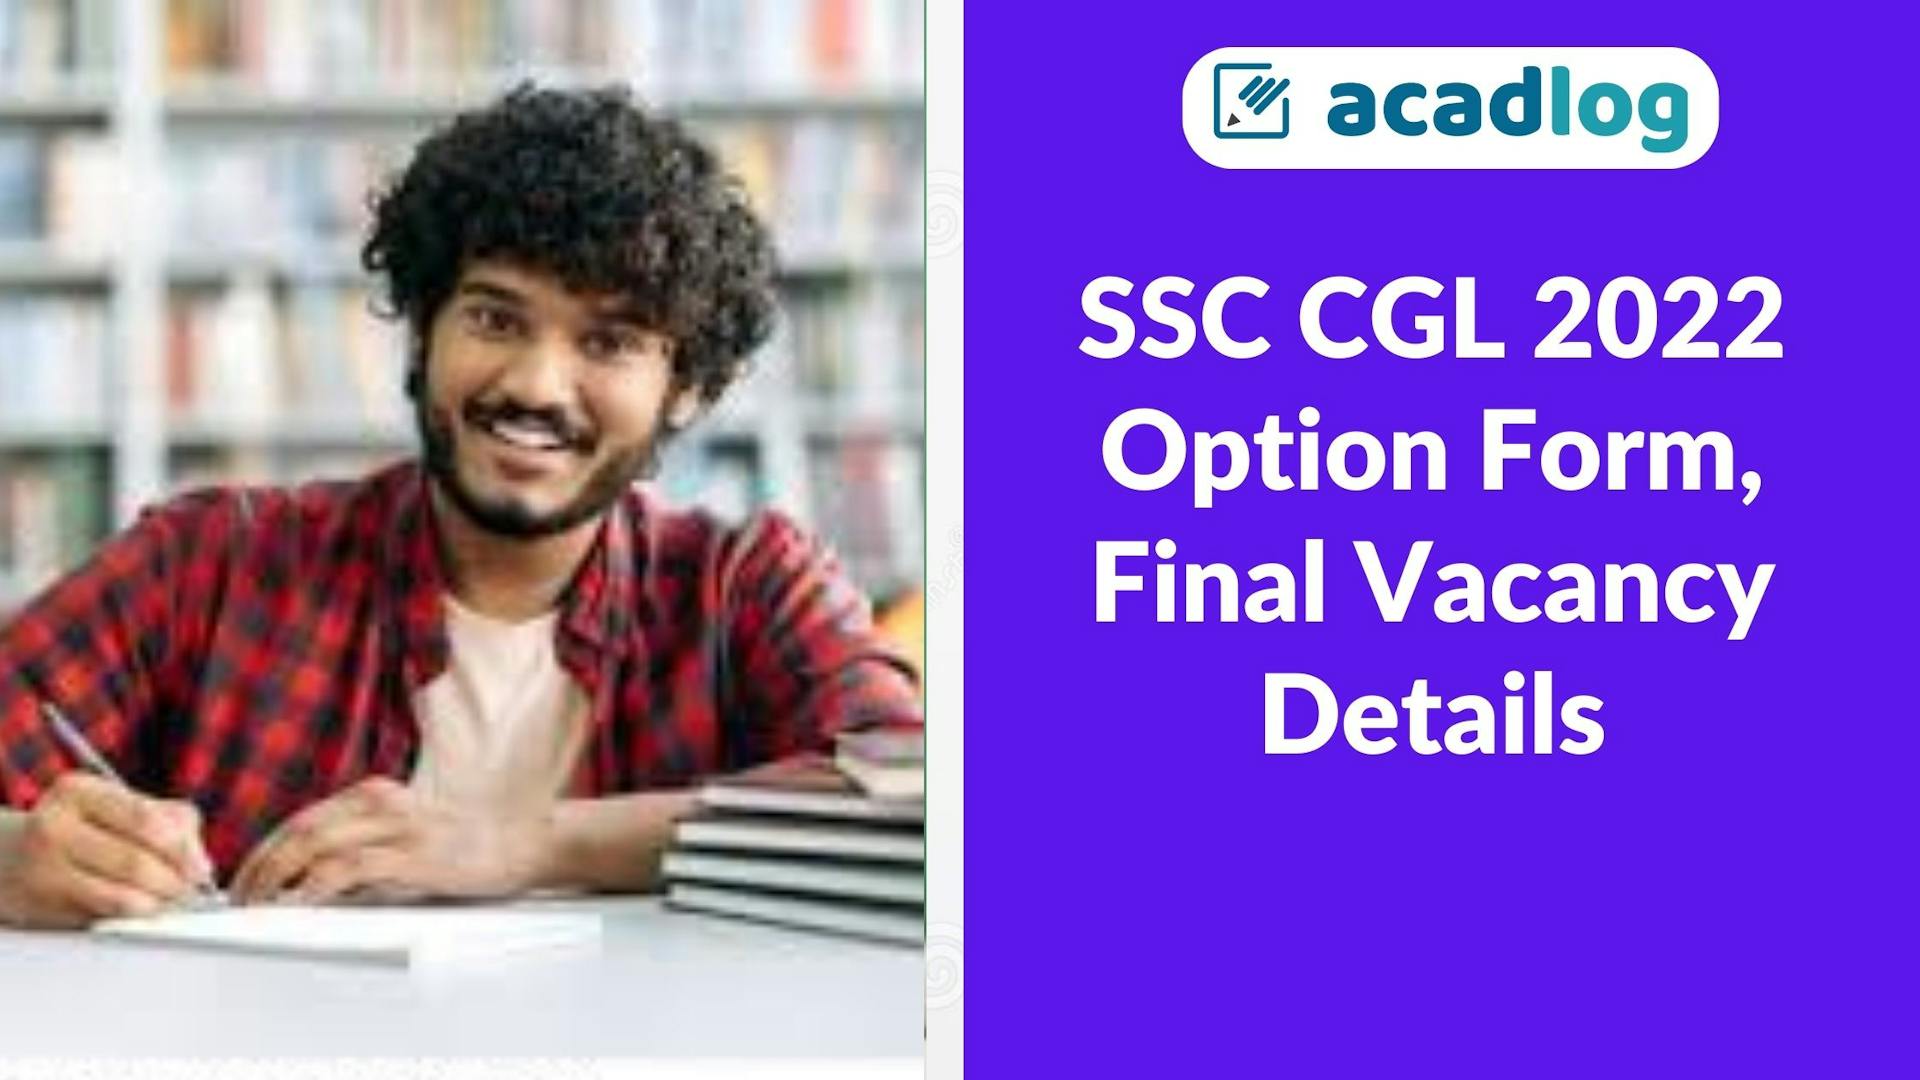 Acadlog: SSC Combined Graduate Level CGL Exam 2022 Option Form